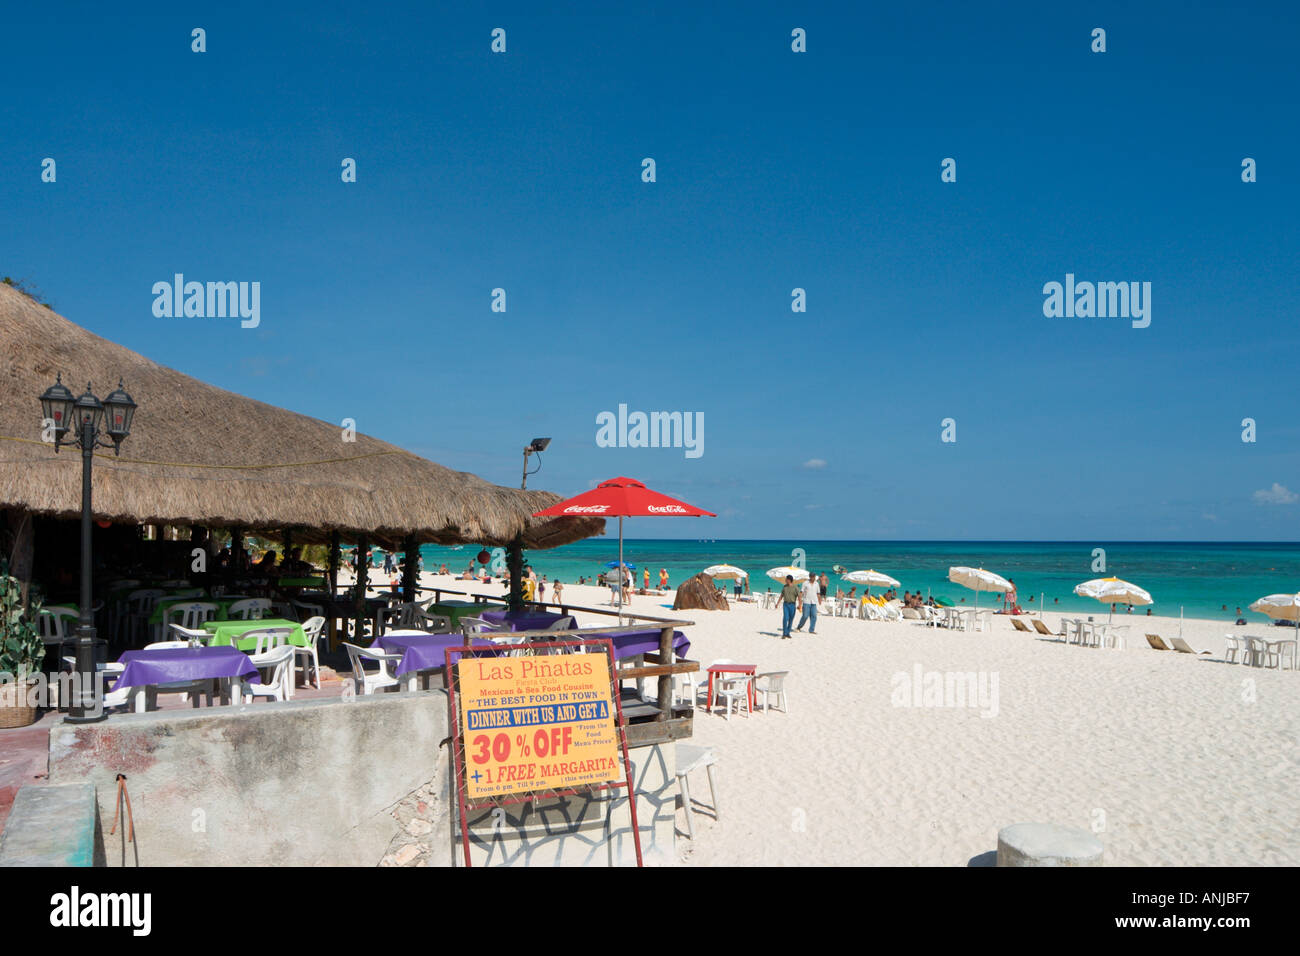 Beach and restaurant in the resort centre, Playa del Carmen, Riviera Maya, Yucatan Peninsula, Mexico Stock Photo